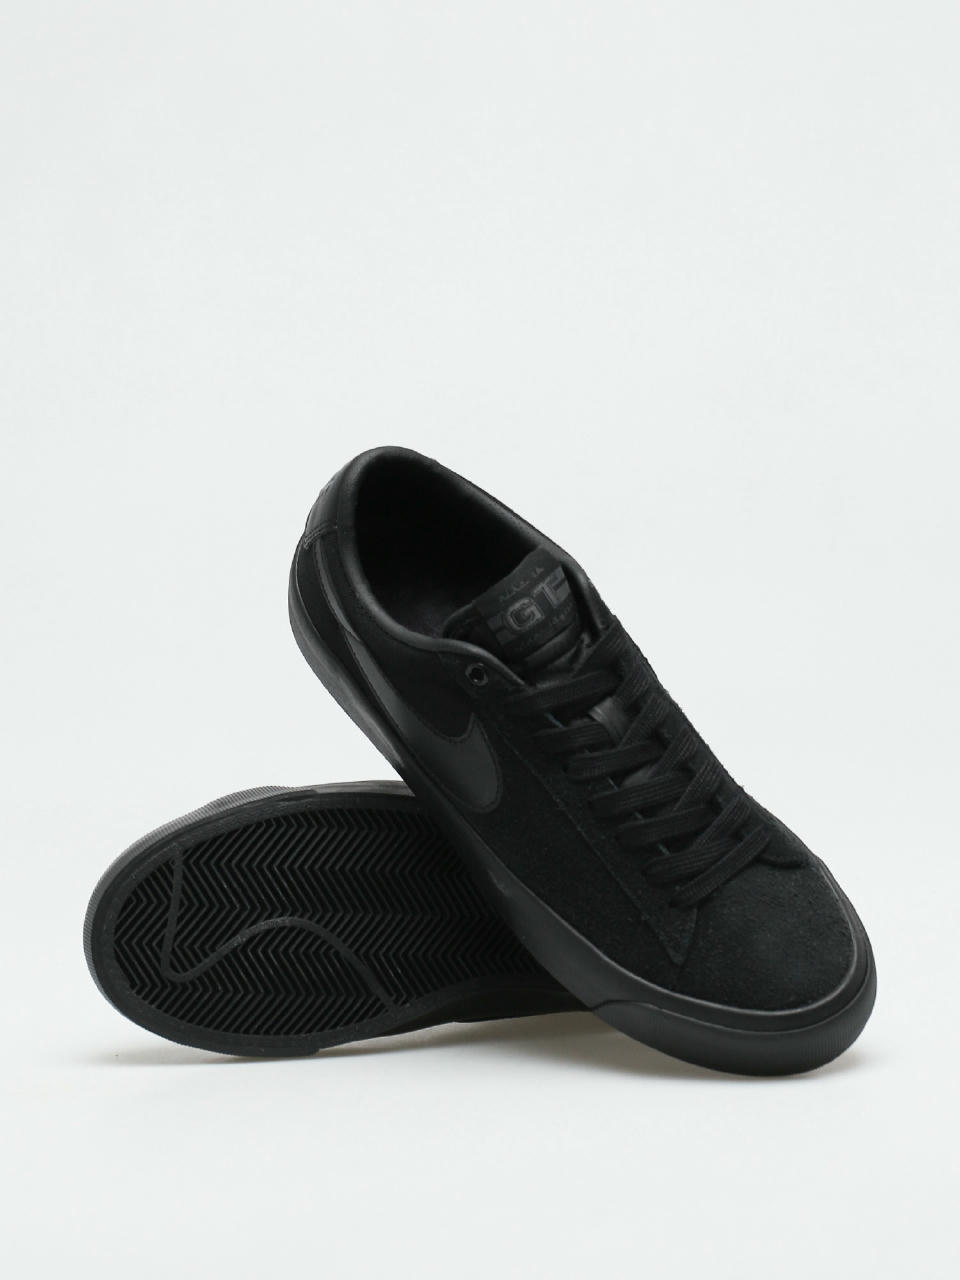 Nike Sb Zoom Blazer Low Pro Gt Shoes Black Black Black Anthracite